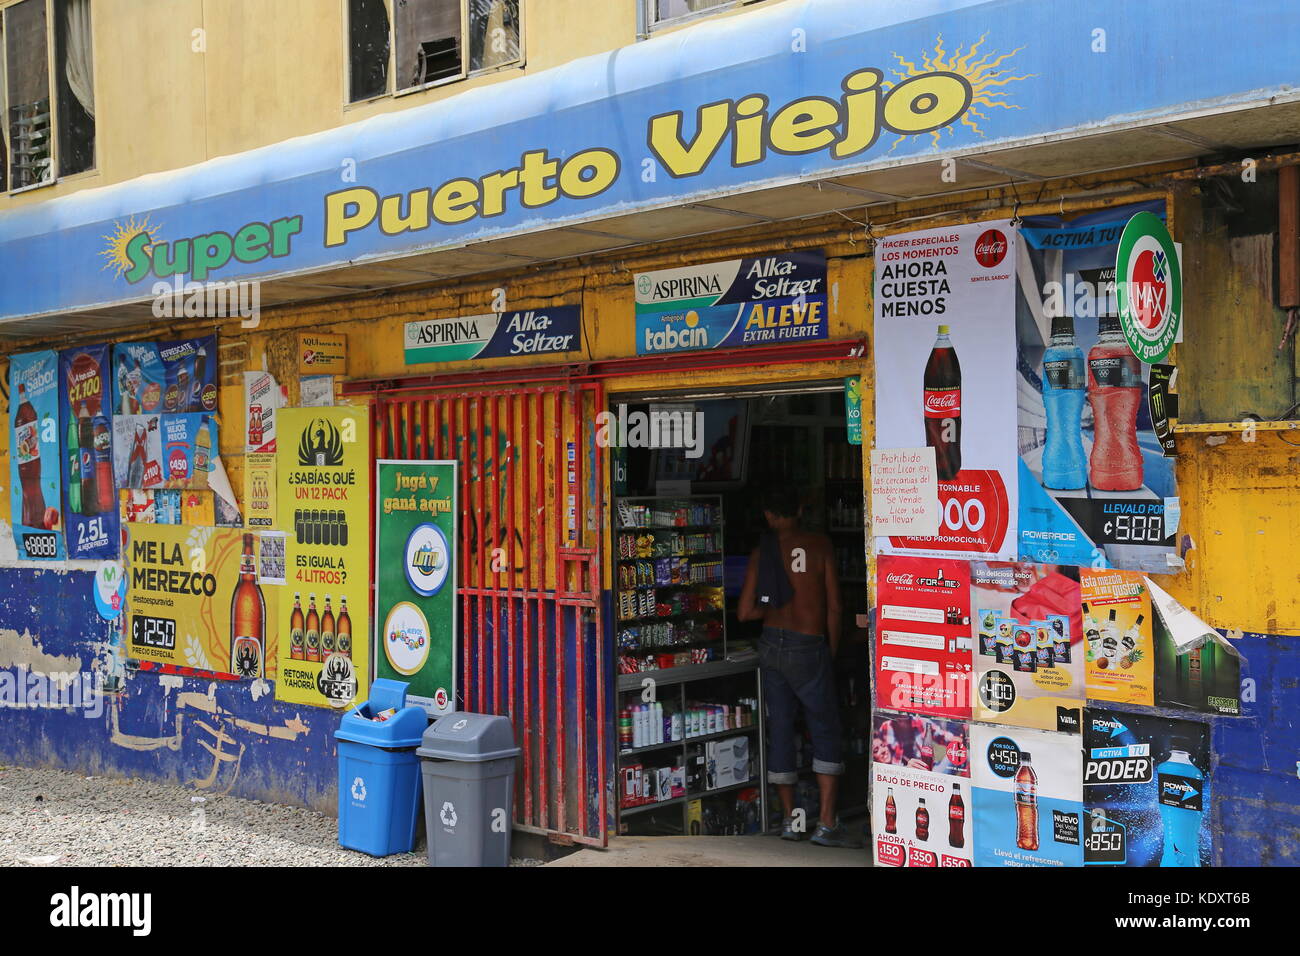 Super Puerto Viejo supermarket, Avenida 71, Puerto Viejo de Talamanca,  Limón province, Caribbean Sea, Costa Rica, Central America Stock Photo -  Alamy